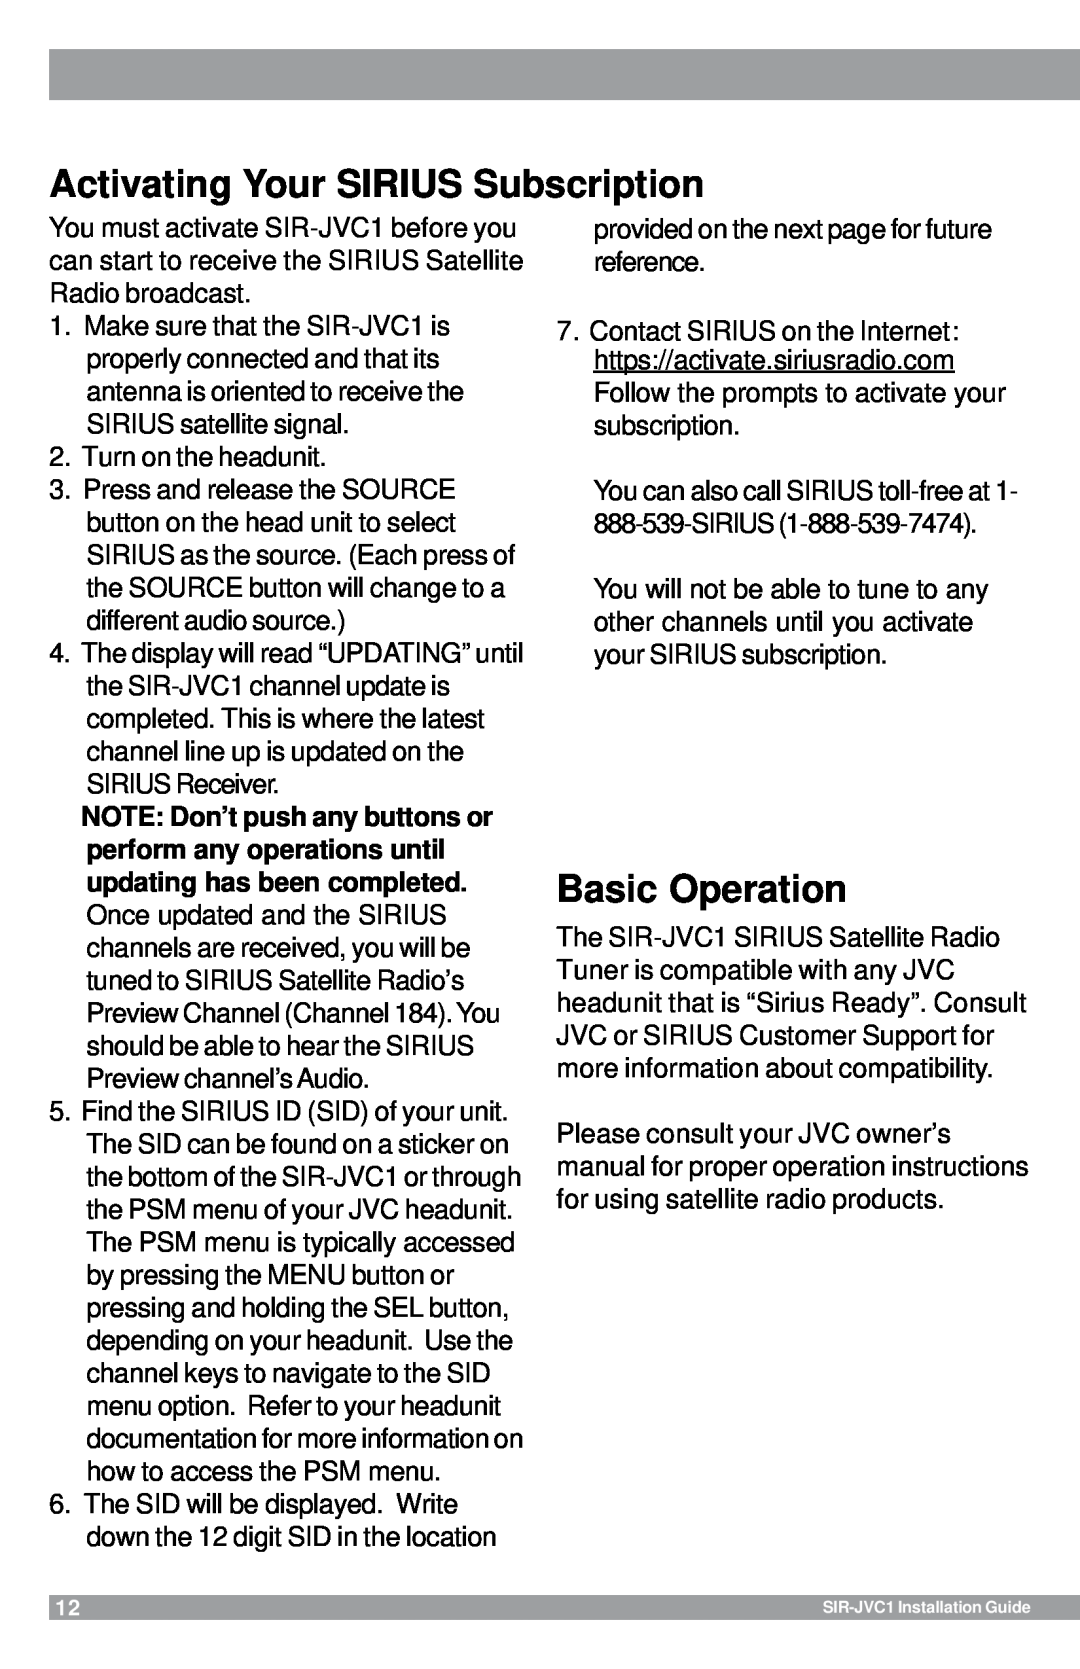 Sirius Satellite Radio SIR-JVC1 manual Activating Your SIRIUS Subscription, Basic Operation 